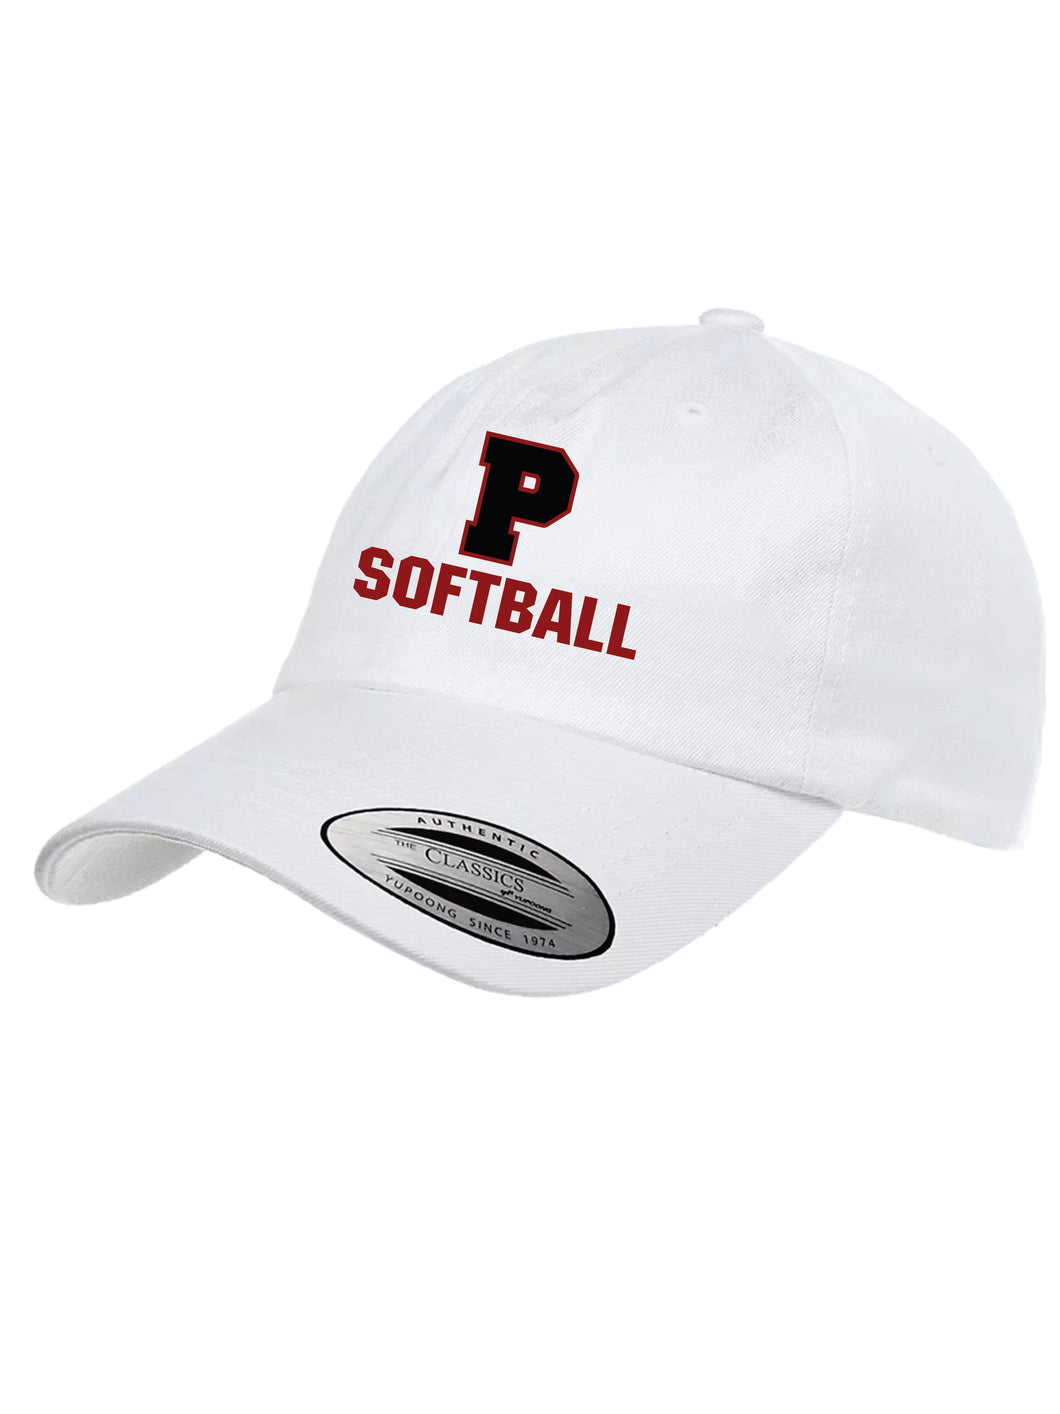 PHS Softball Adjustable hat